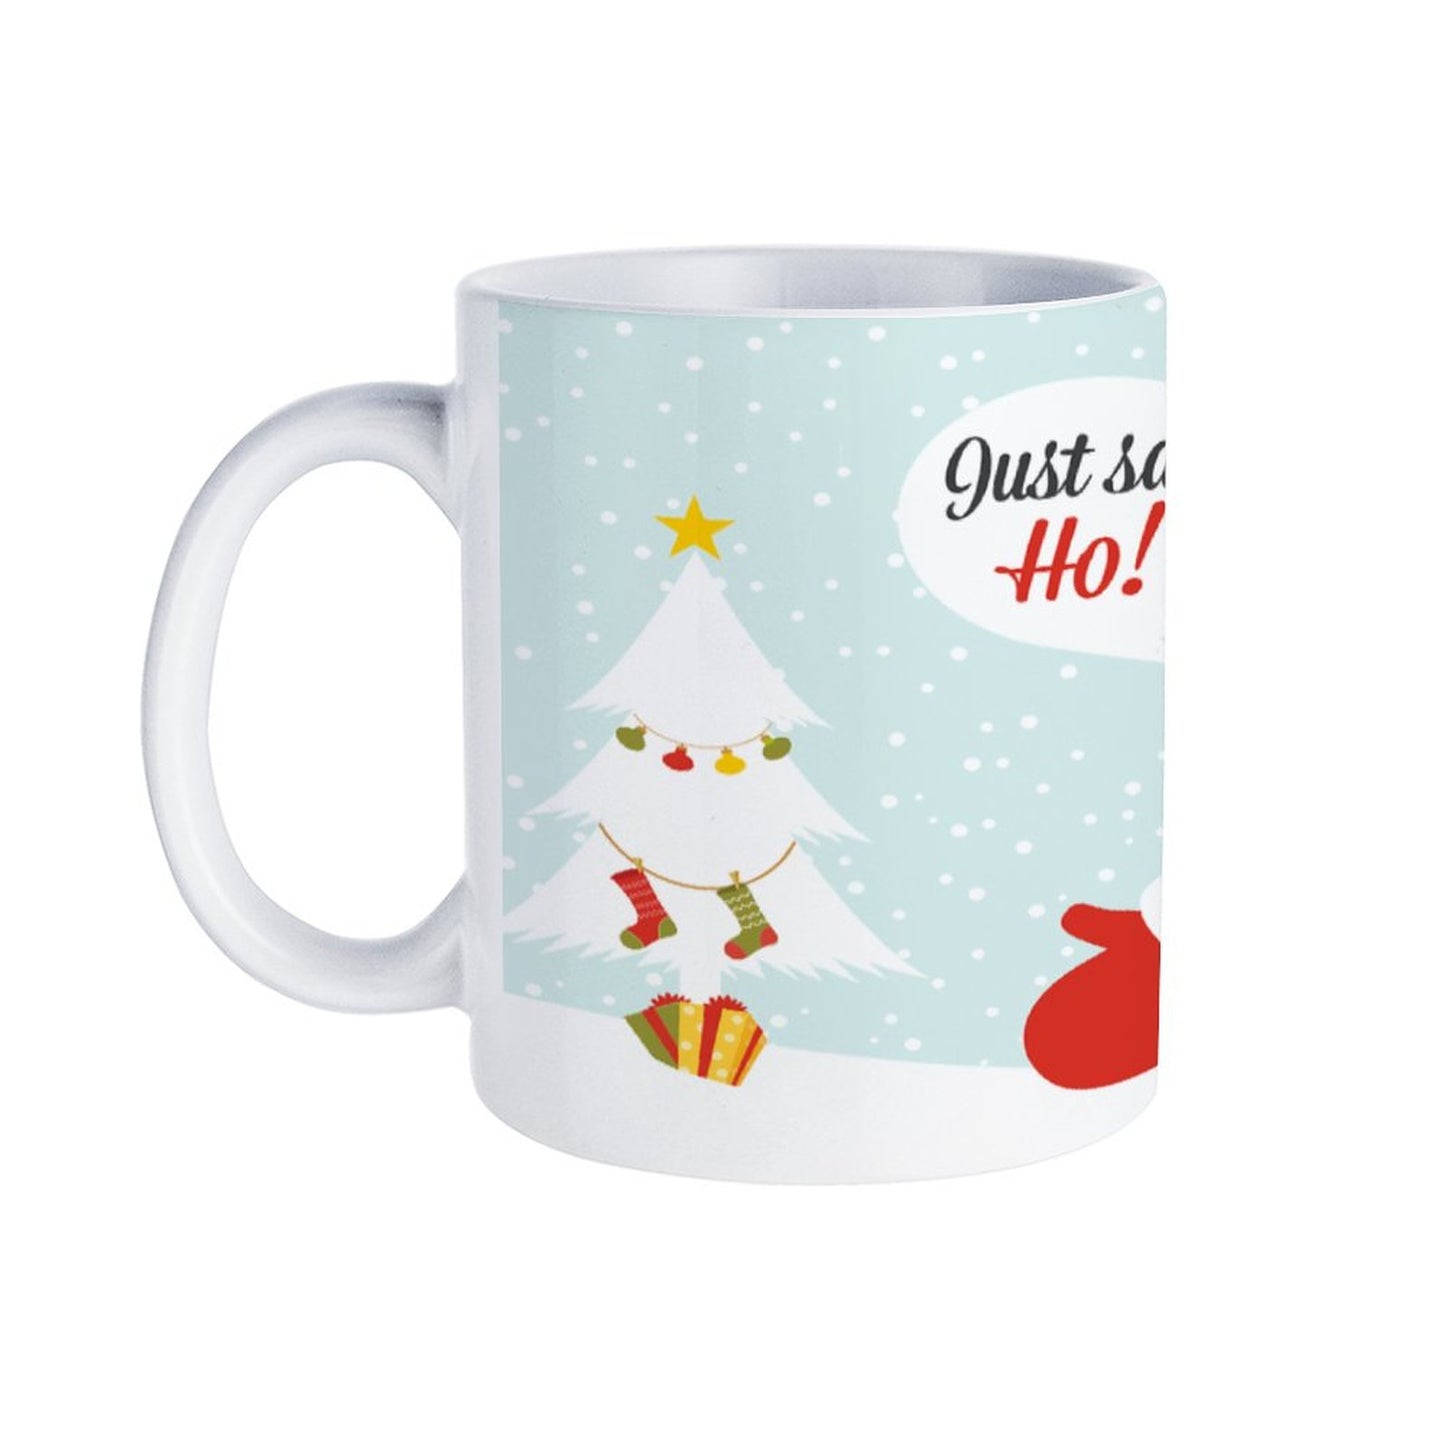 Online DIY White Mug Merry Christmas Happy Santa Claus White-style One Size Full-width Printing